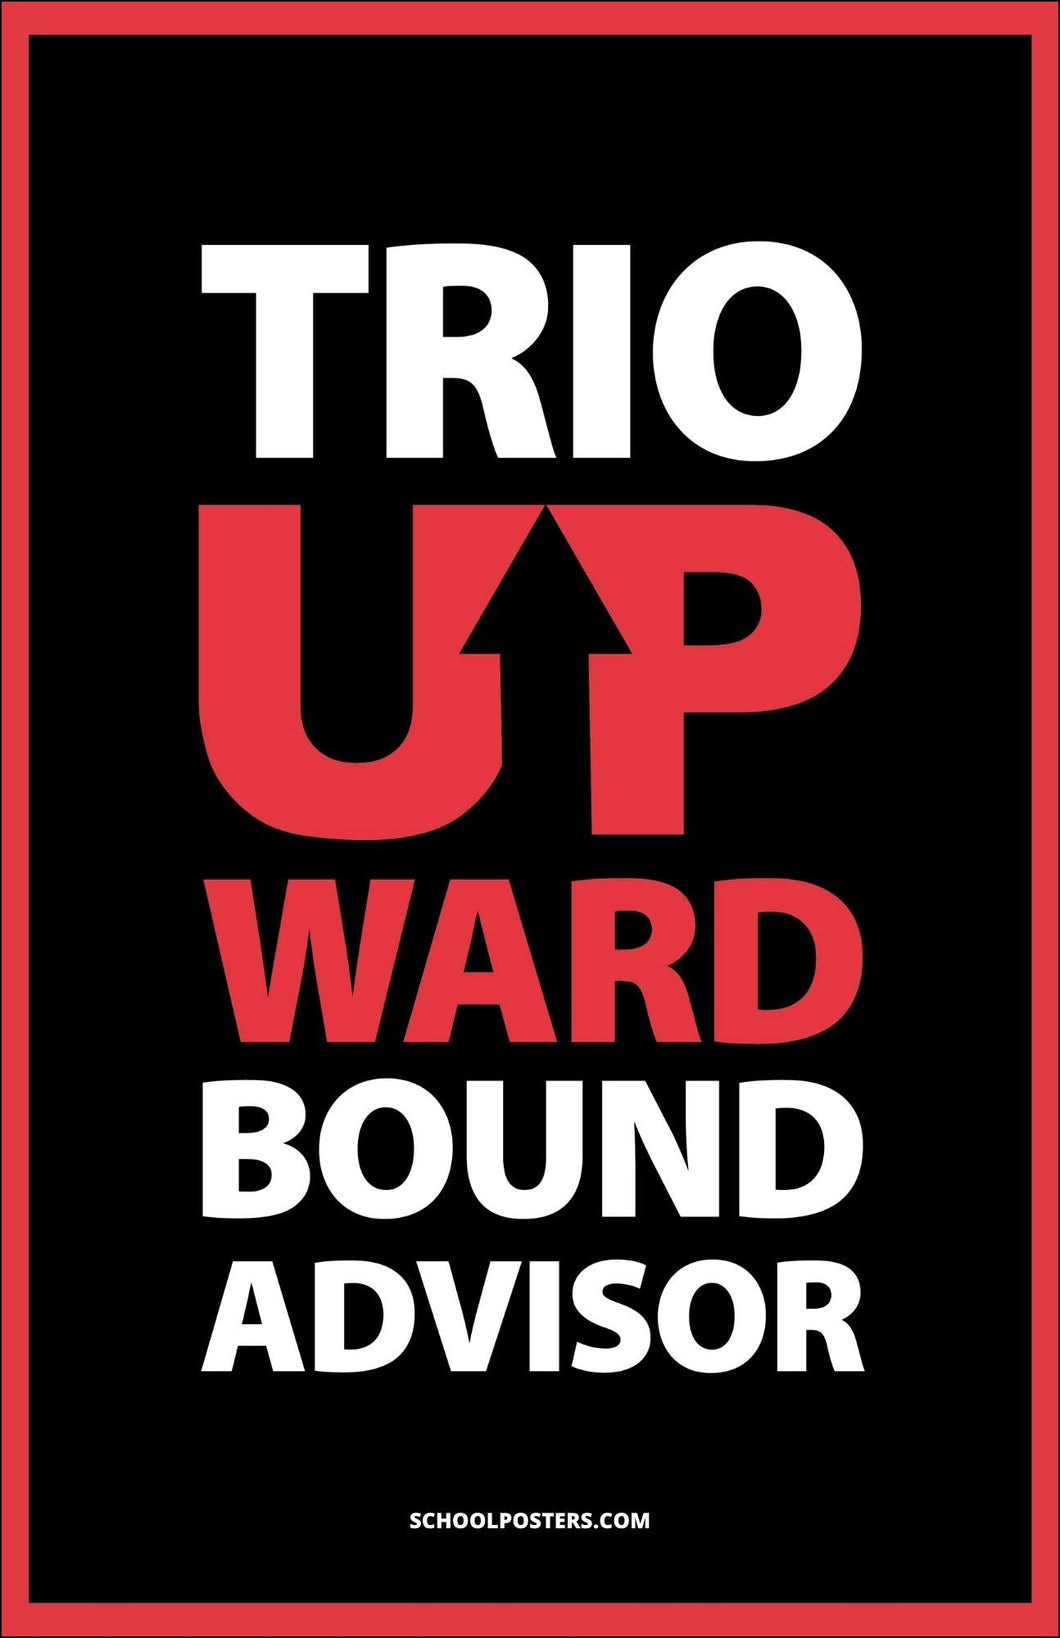 TRIO Upward Bound Advisor Poster